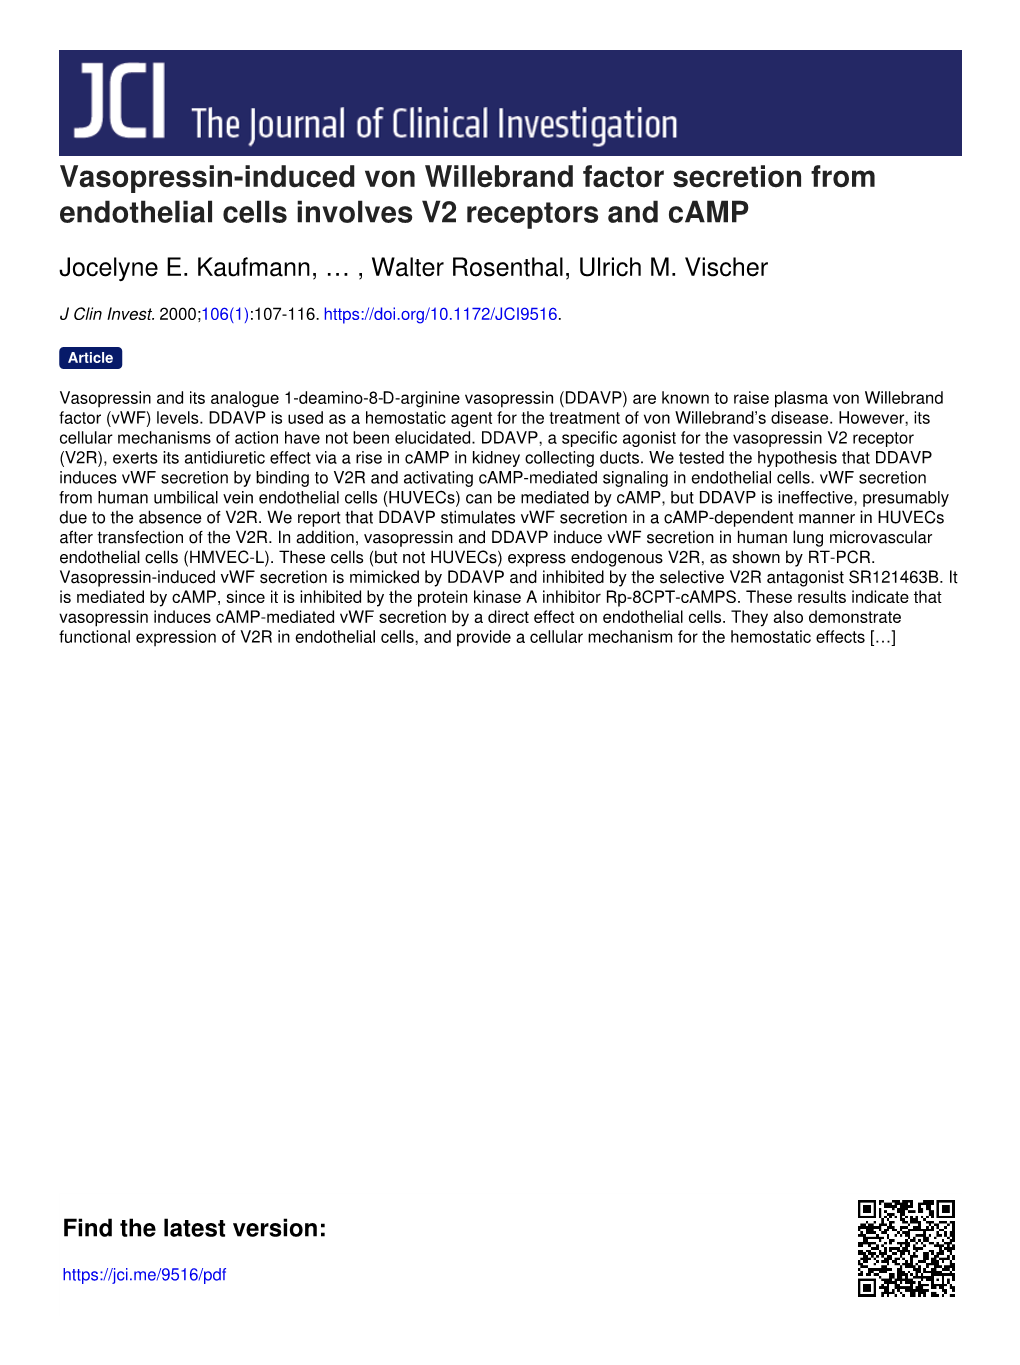 Vasopressin-Induced Von Willebrand Factor Secretion from Endothelial Cells Involves V2 Receptors and Camp